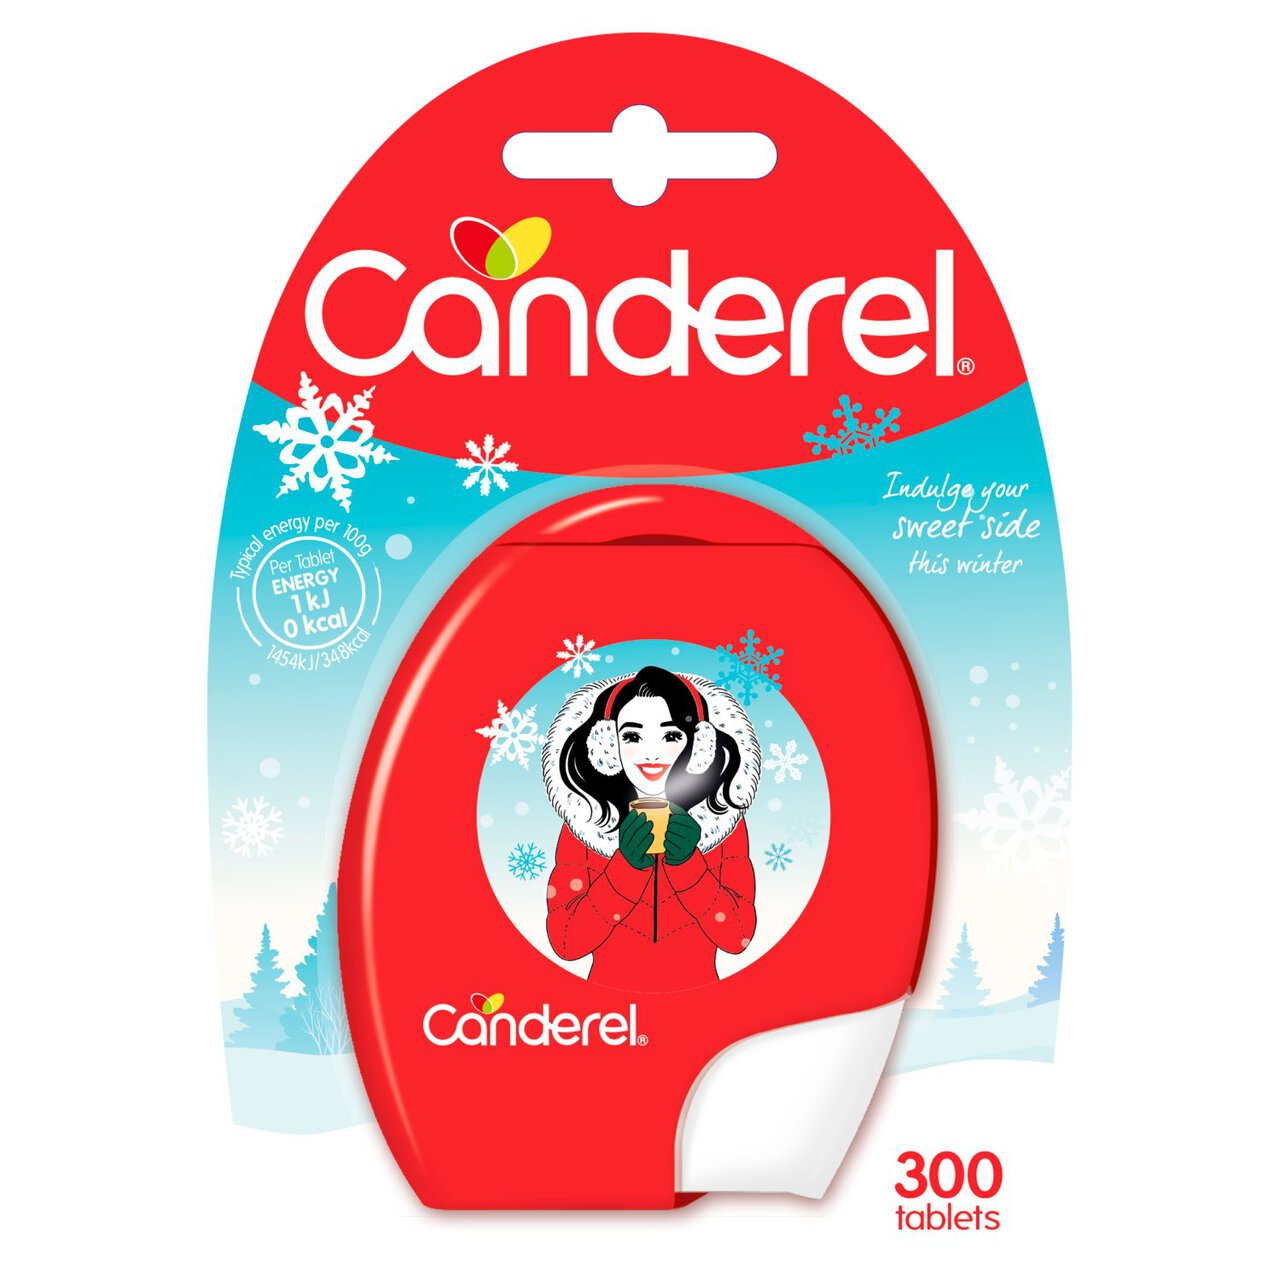 Canderel Sweeteners – Perch UK